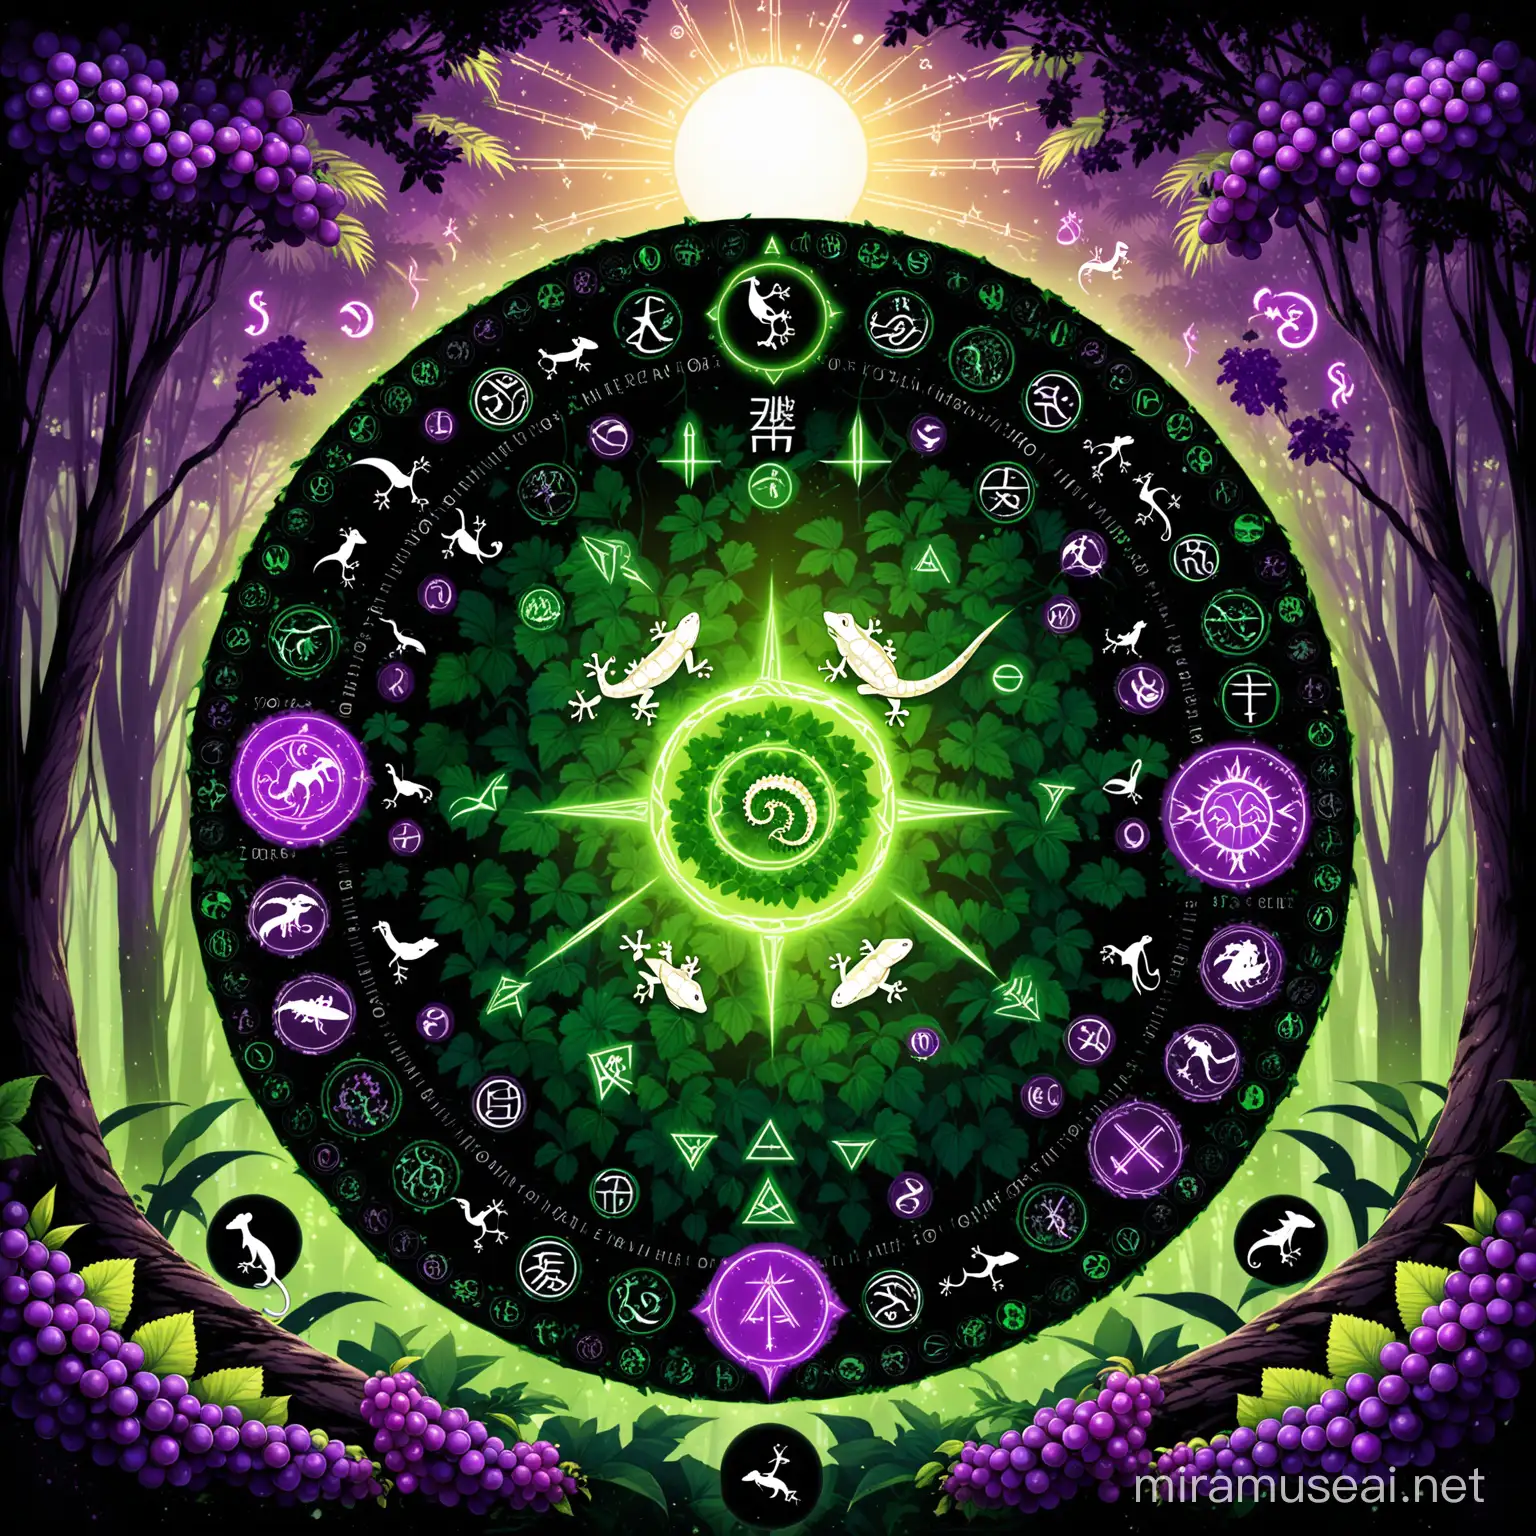 gecko-grape (group)
appreance-noir purple /white/full body/ circle-jungle runes/gecko-body-animal
background-jungle/noirforest/sun/trees/earth-runes